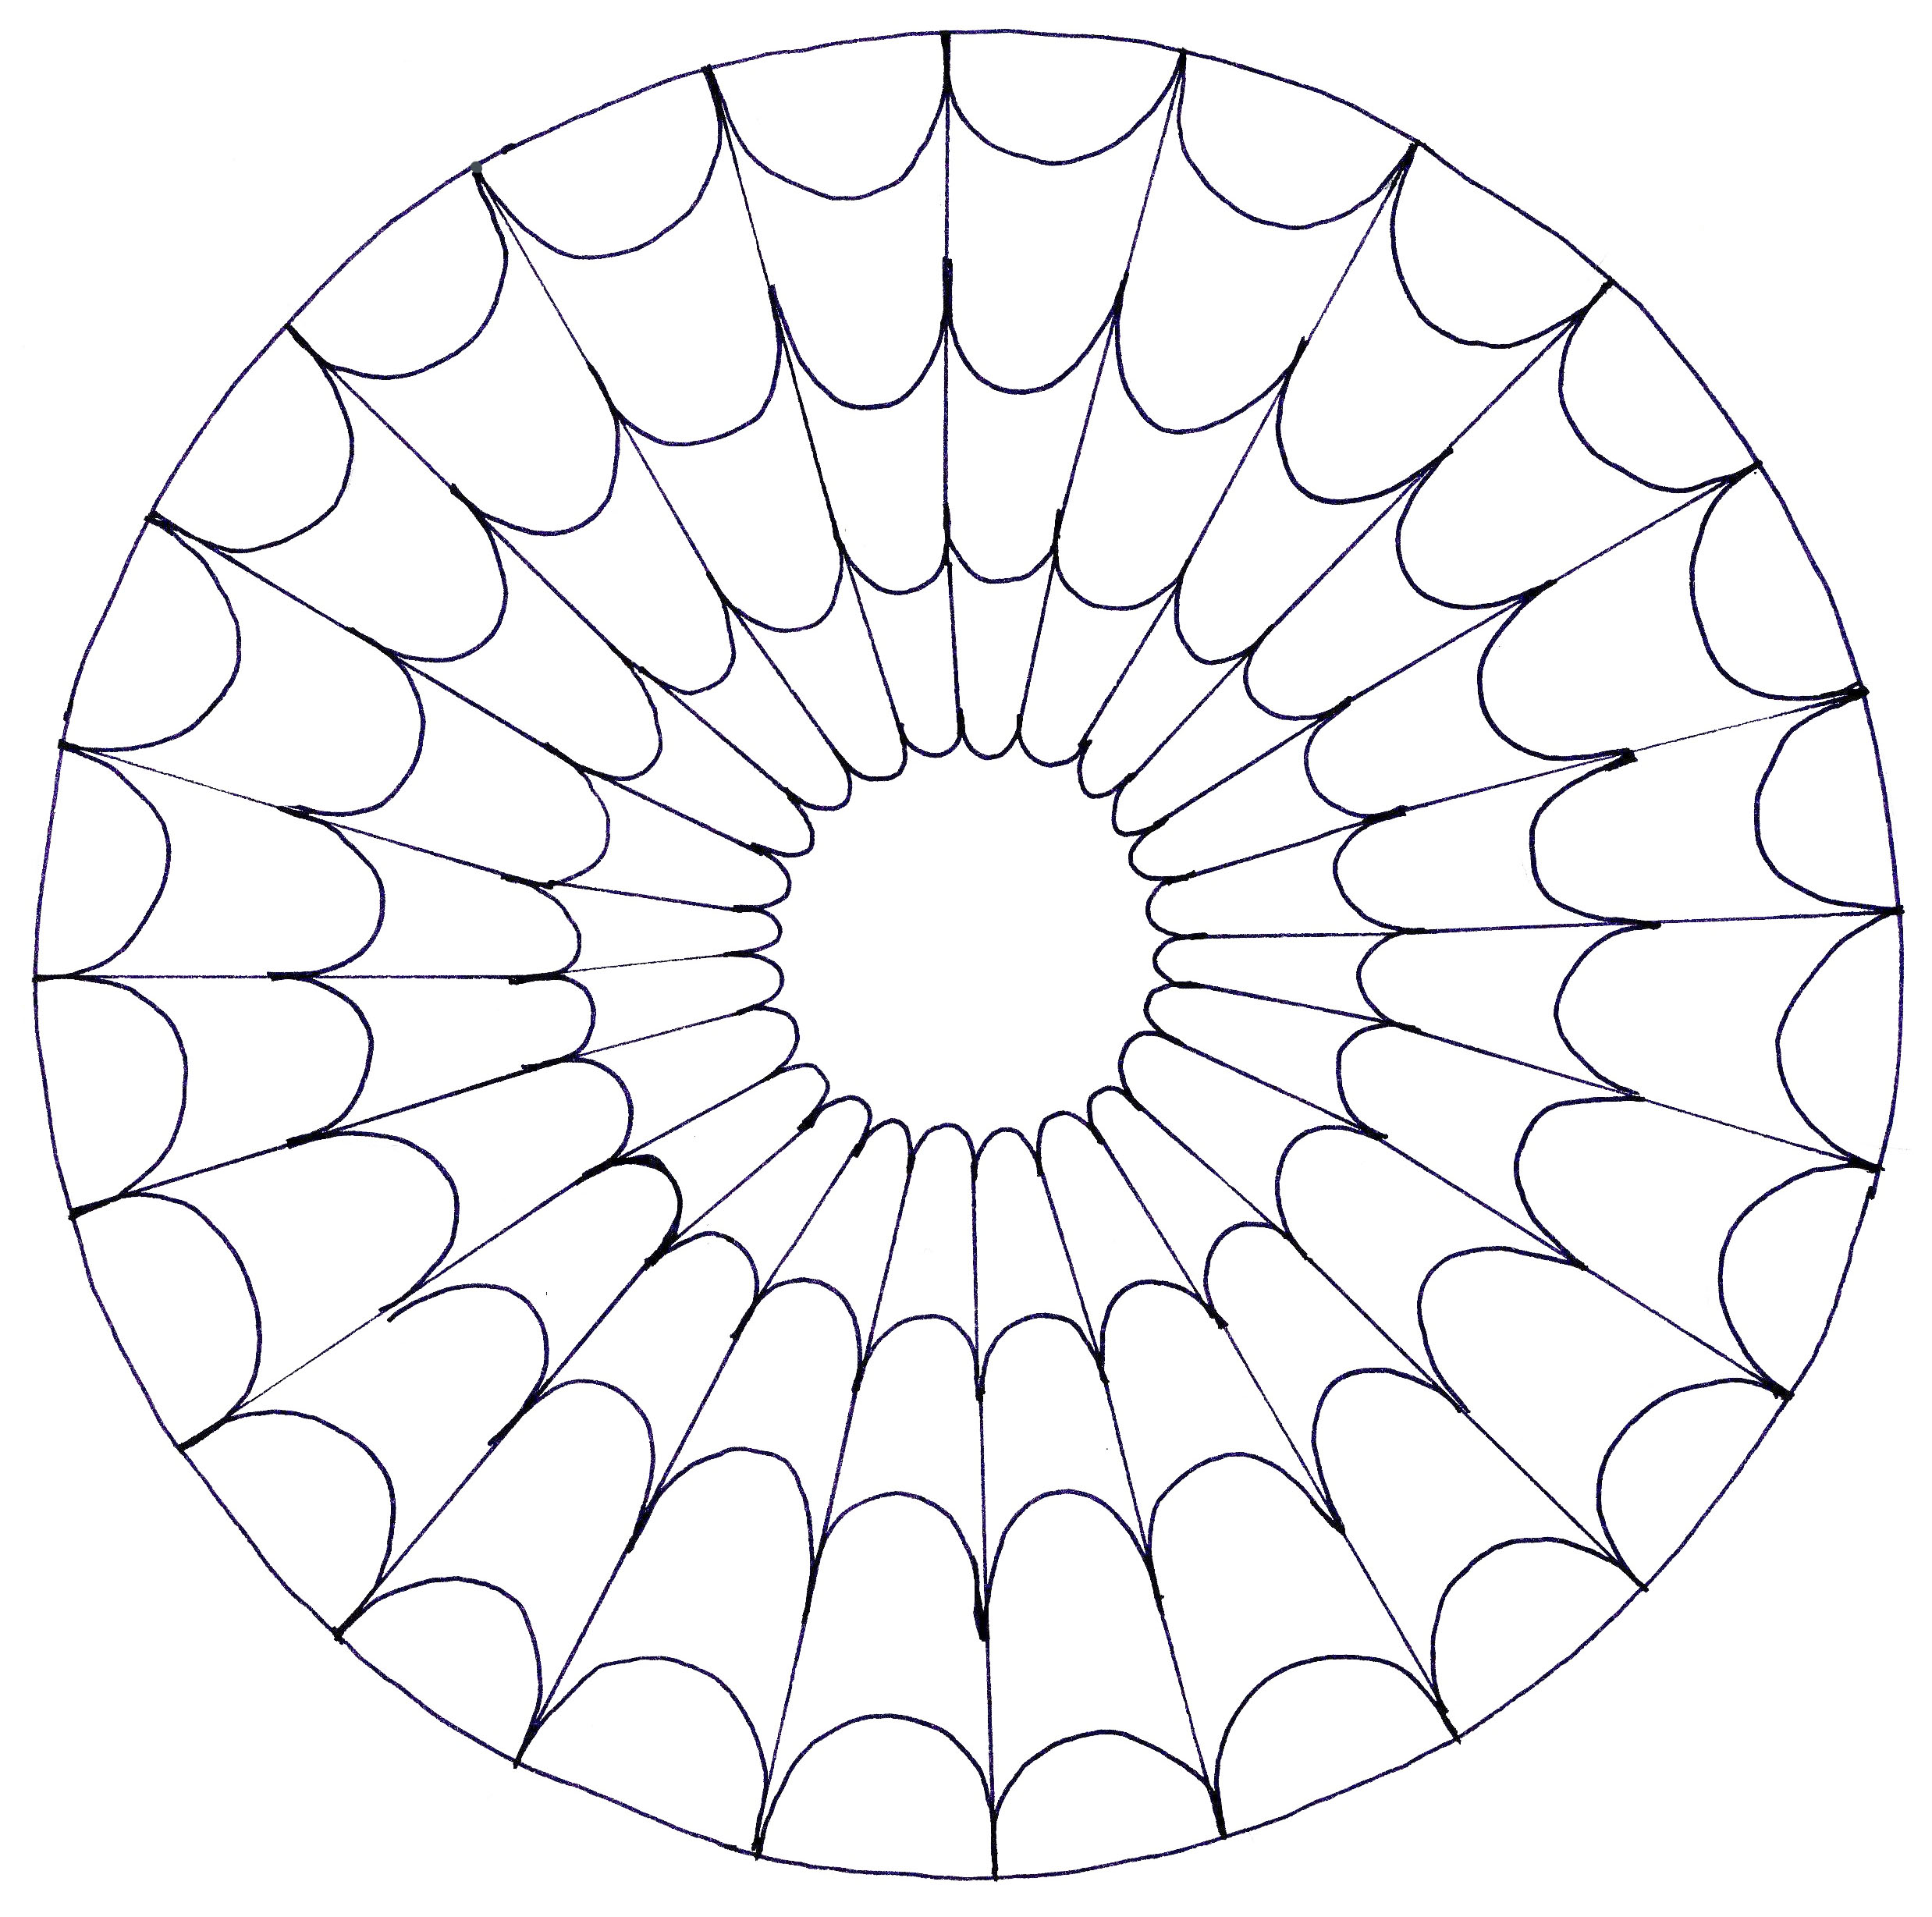 Mandala looking like a spider web